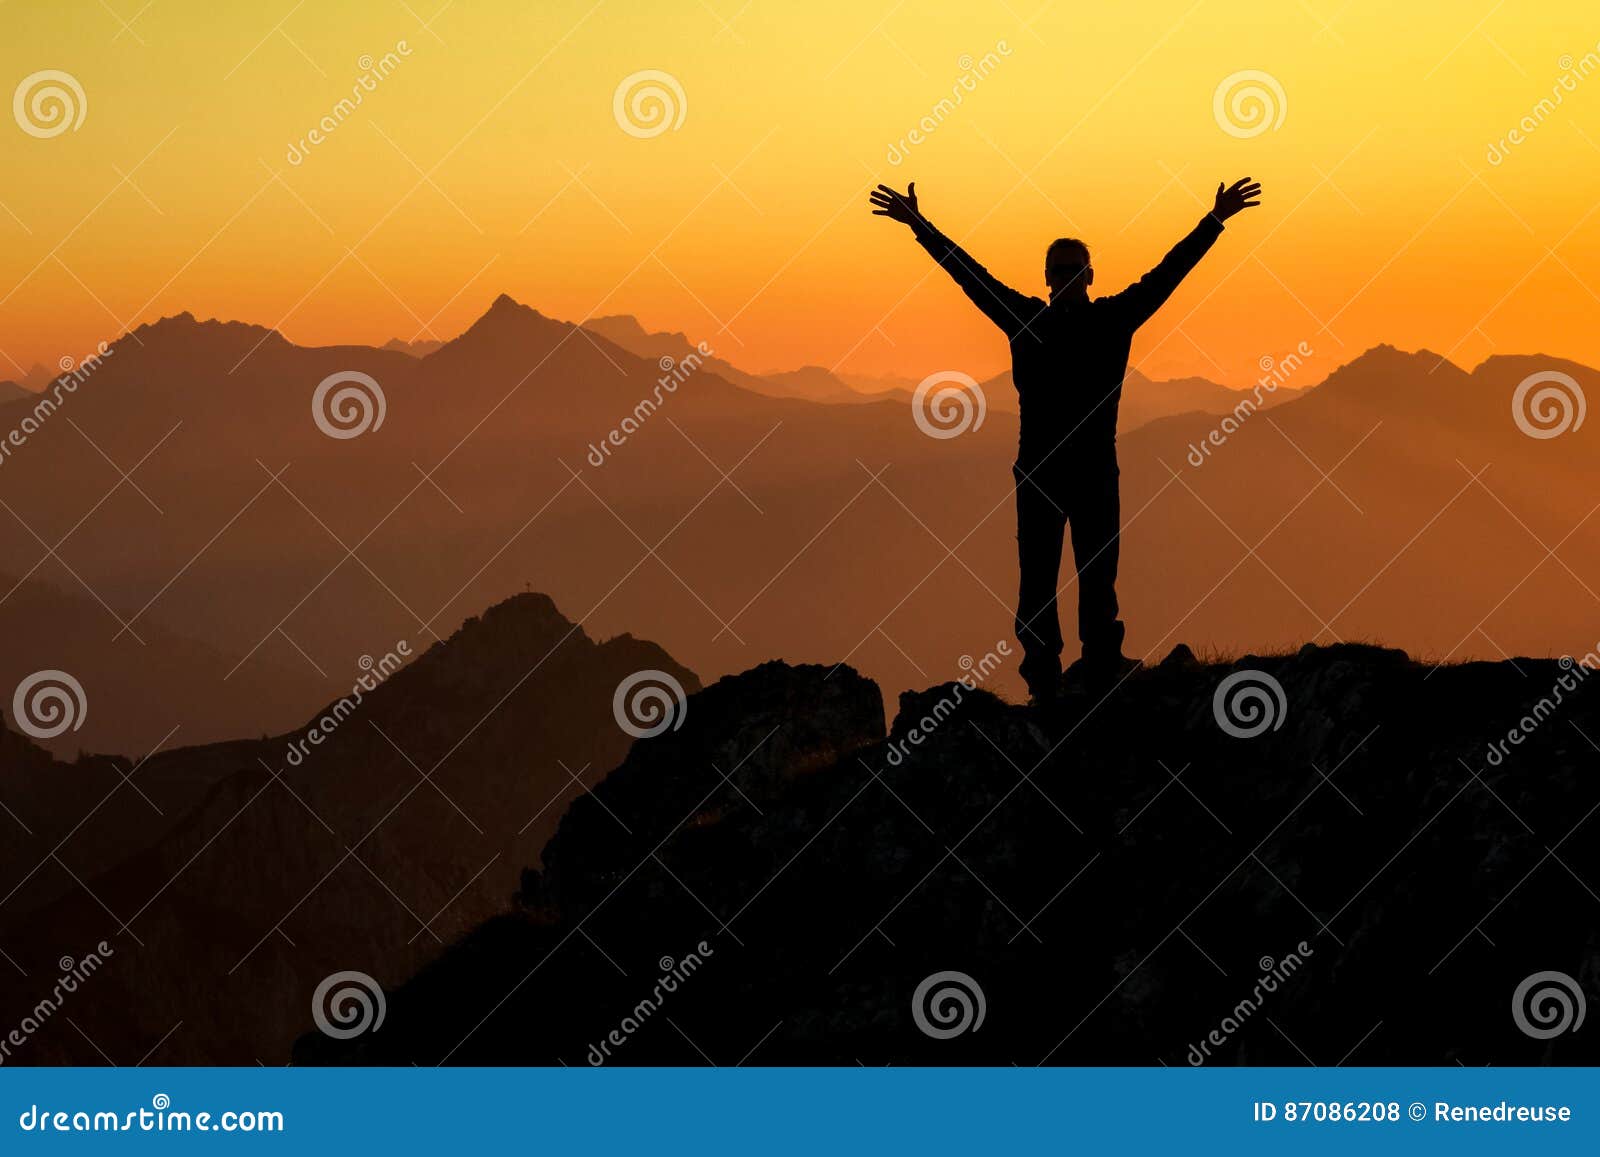 happy success winning man on summit arms up at sunset